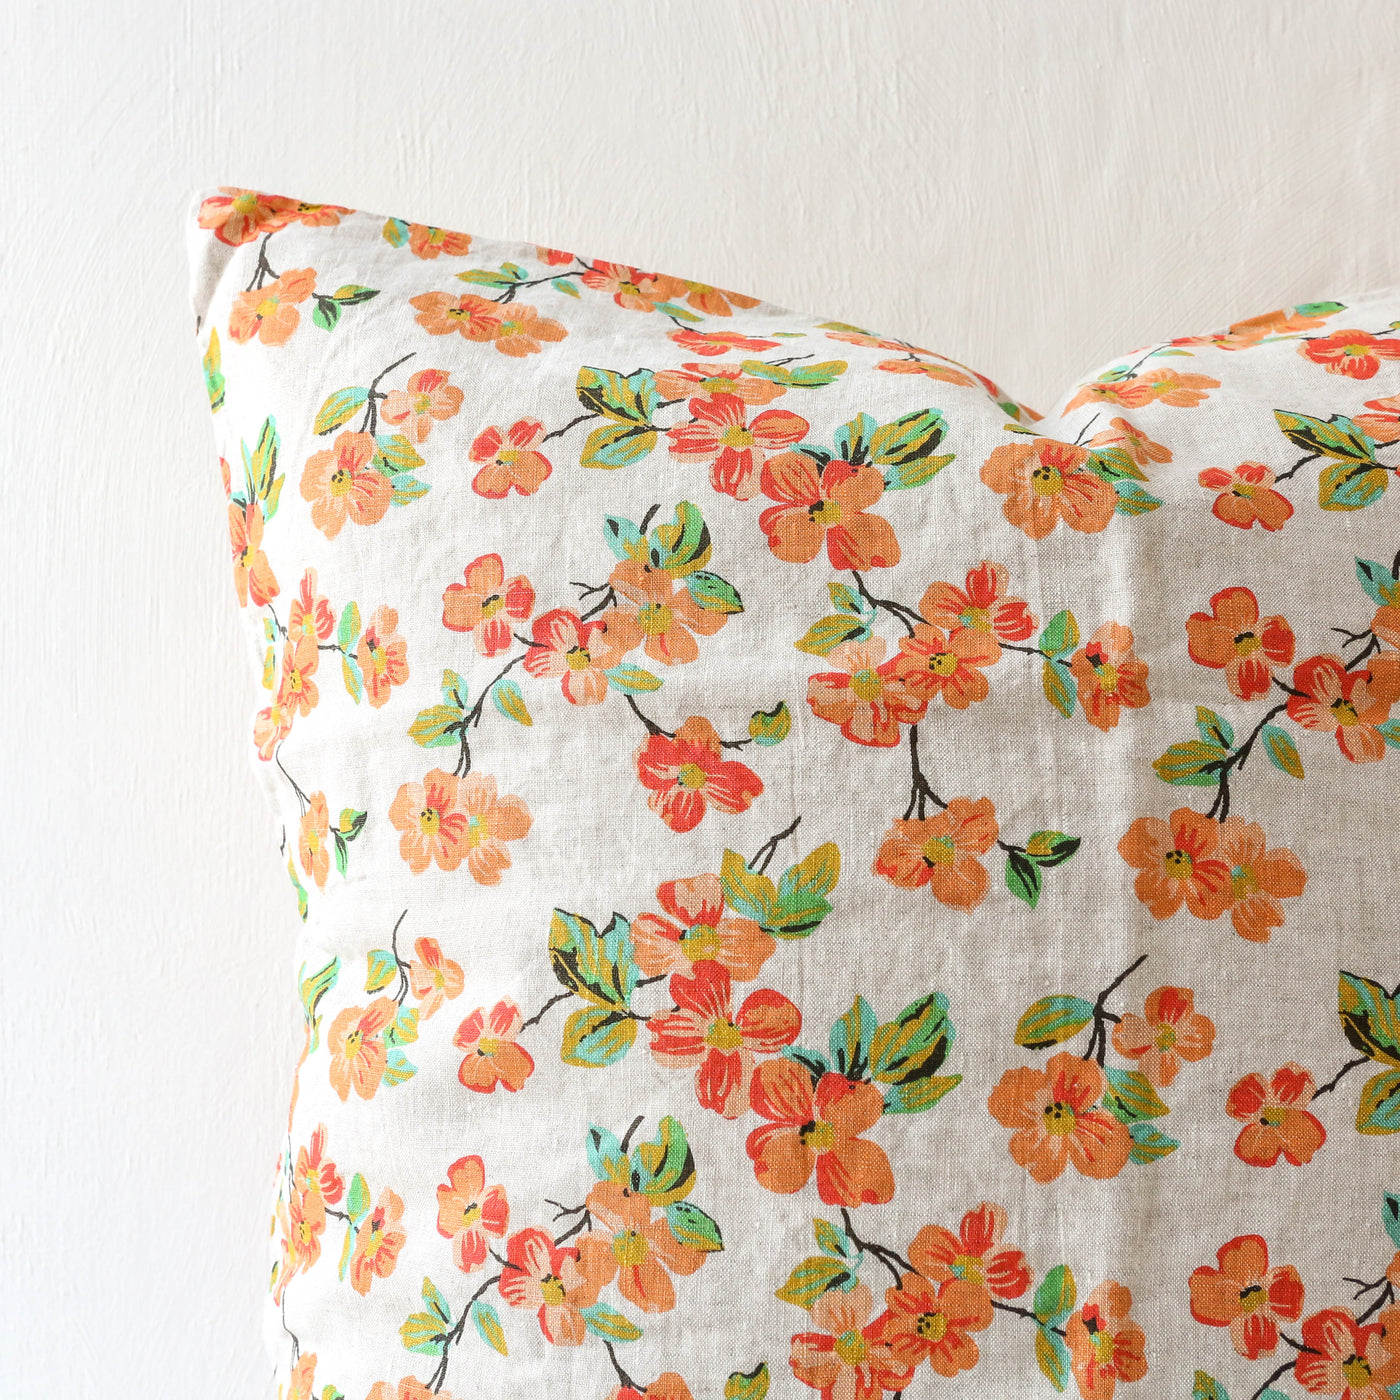 'Elma's Floral' Linen Cushion Cover